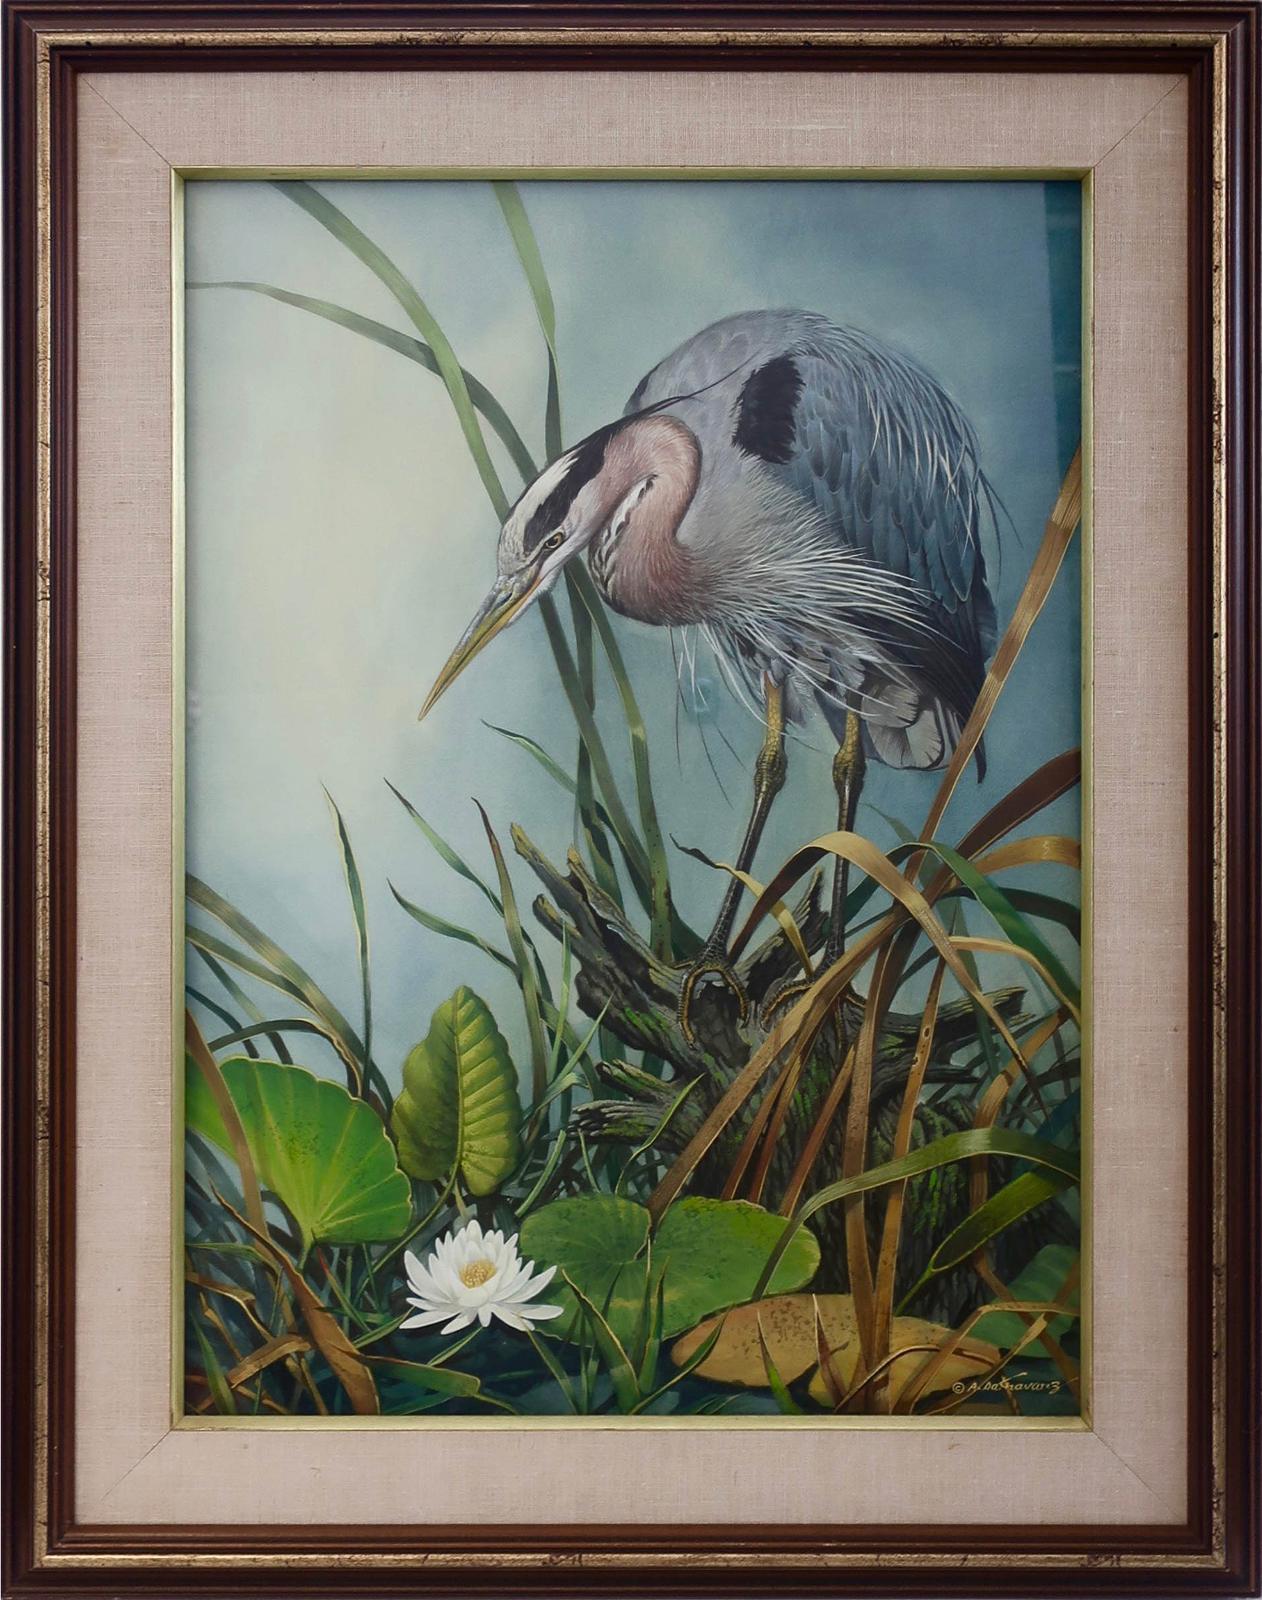 Alan Sakhavarz (1945) - Untitled (Crane In Lily Pond)